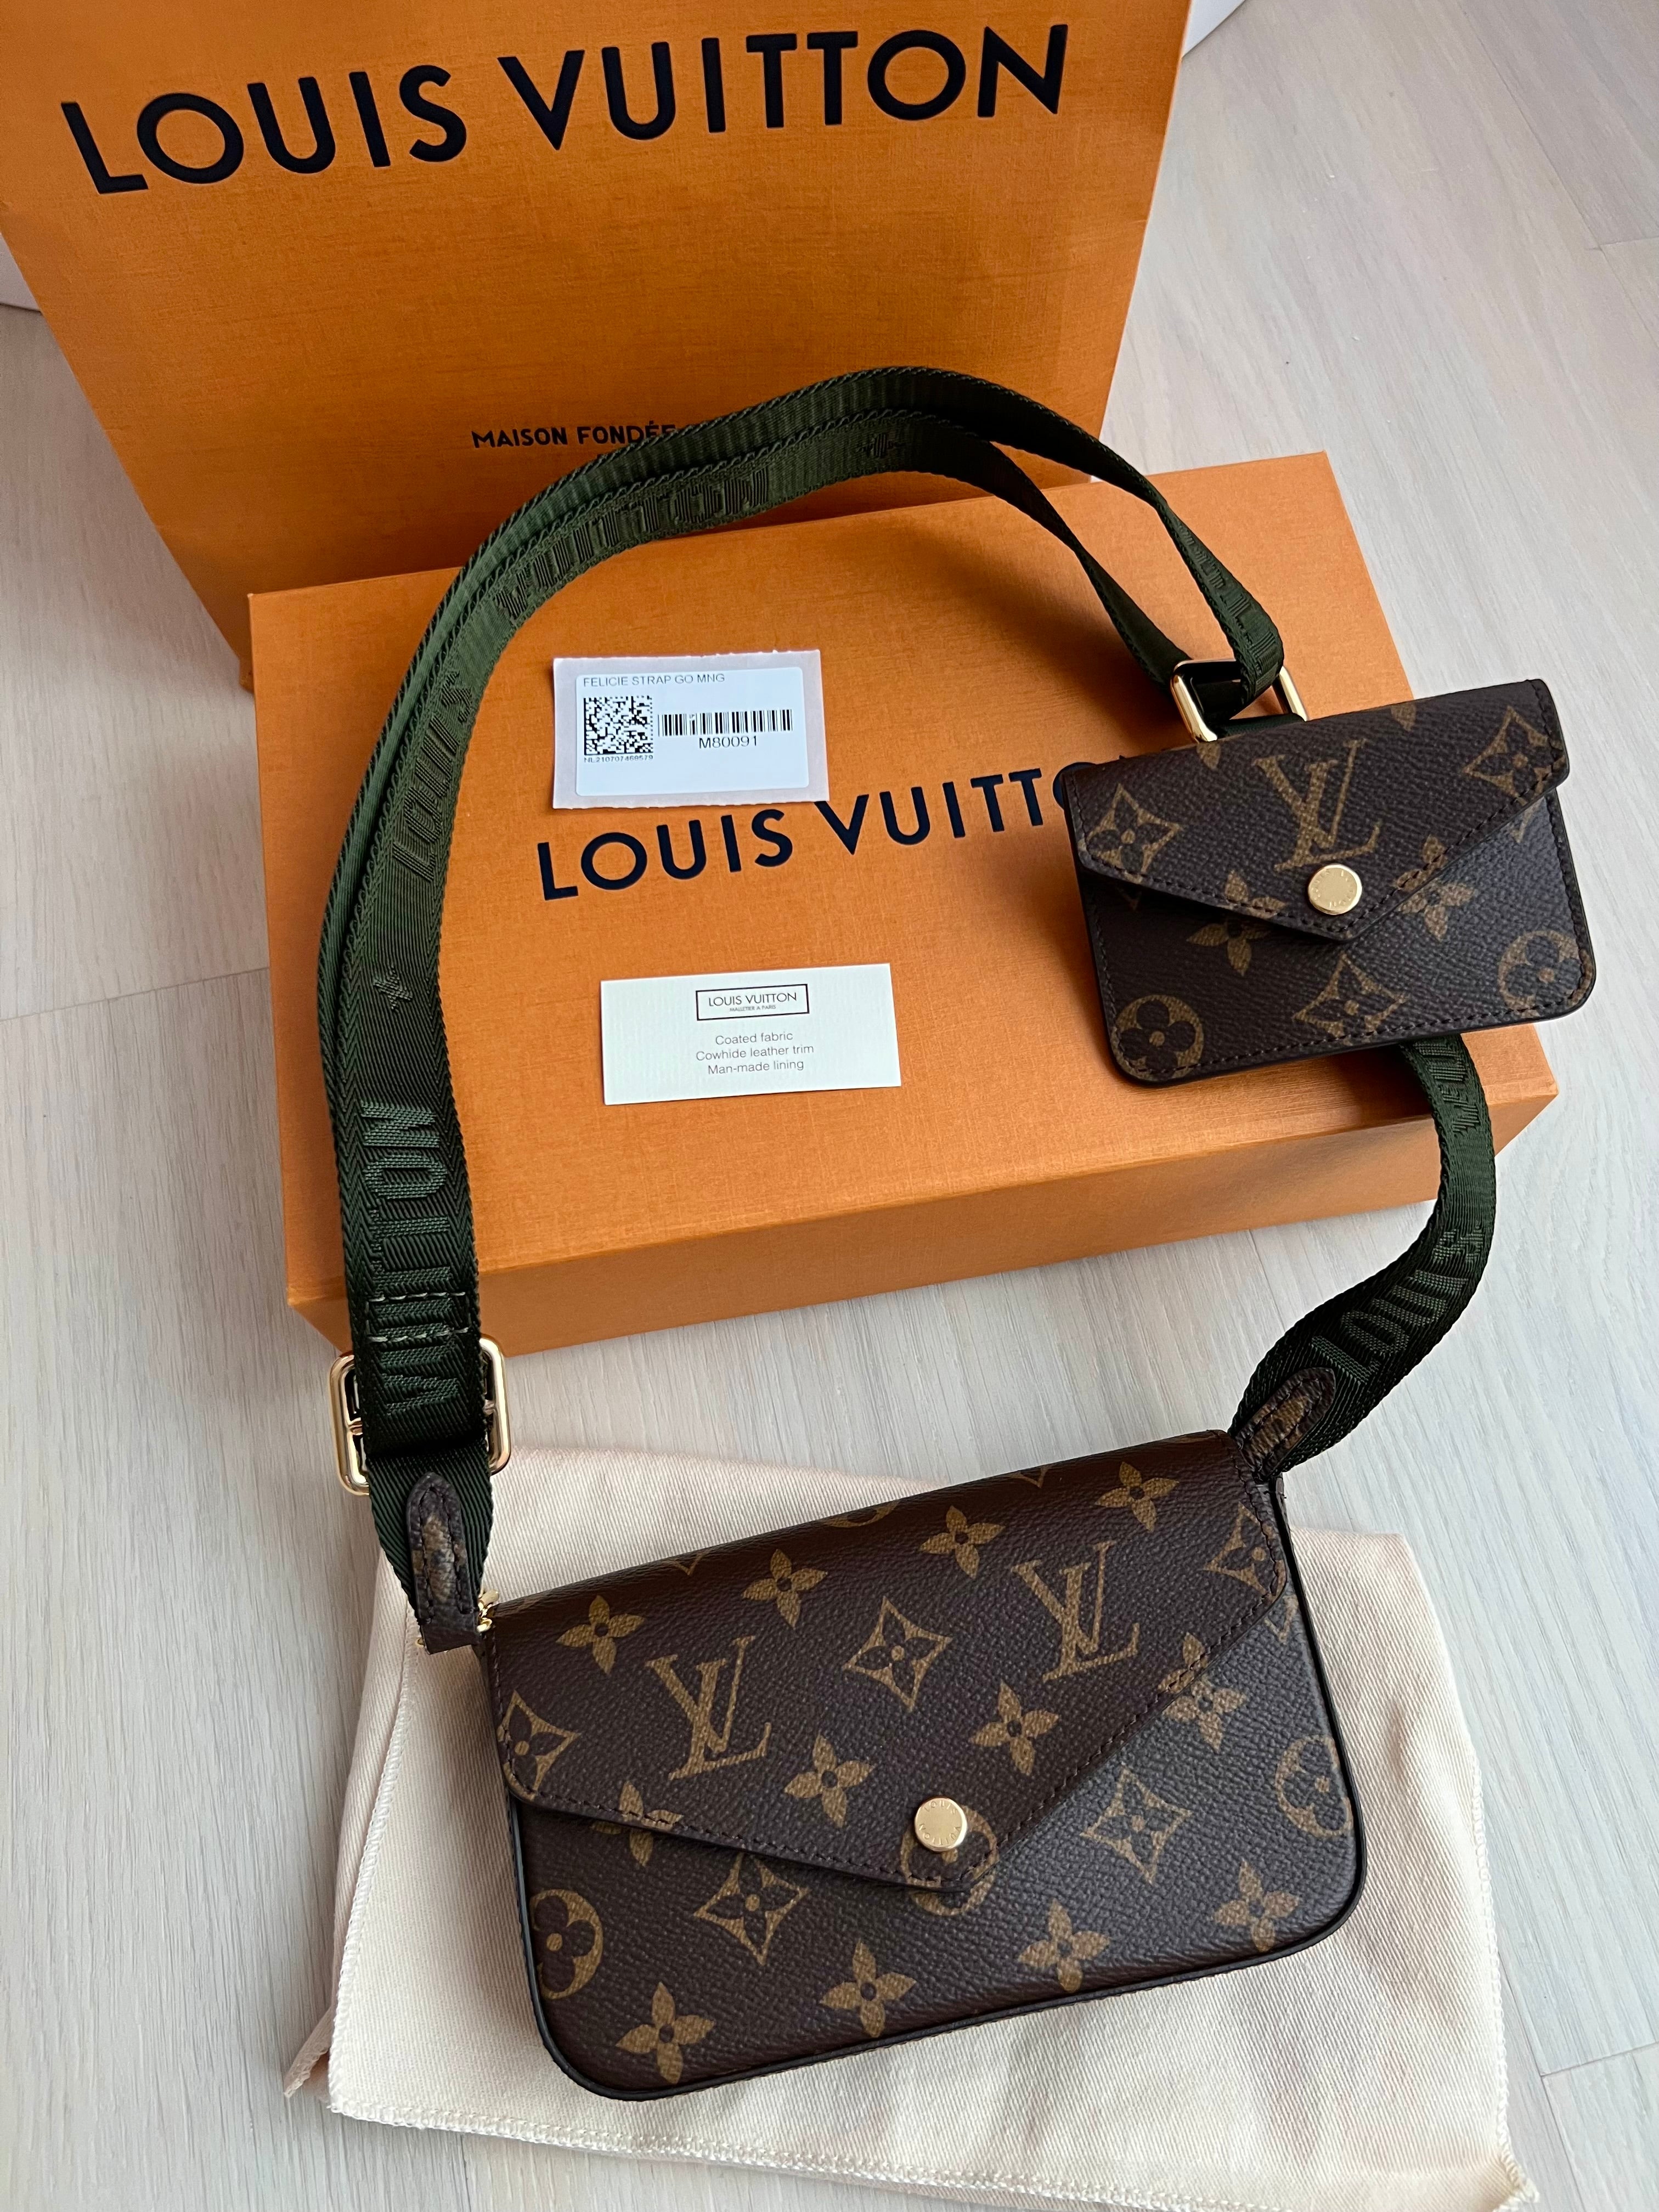 Louis Vuitton F licie Strap & Go